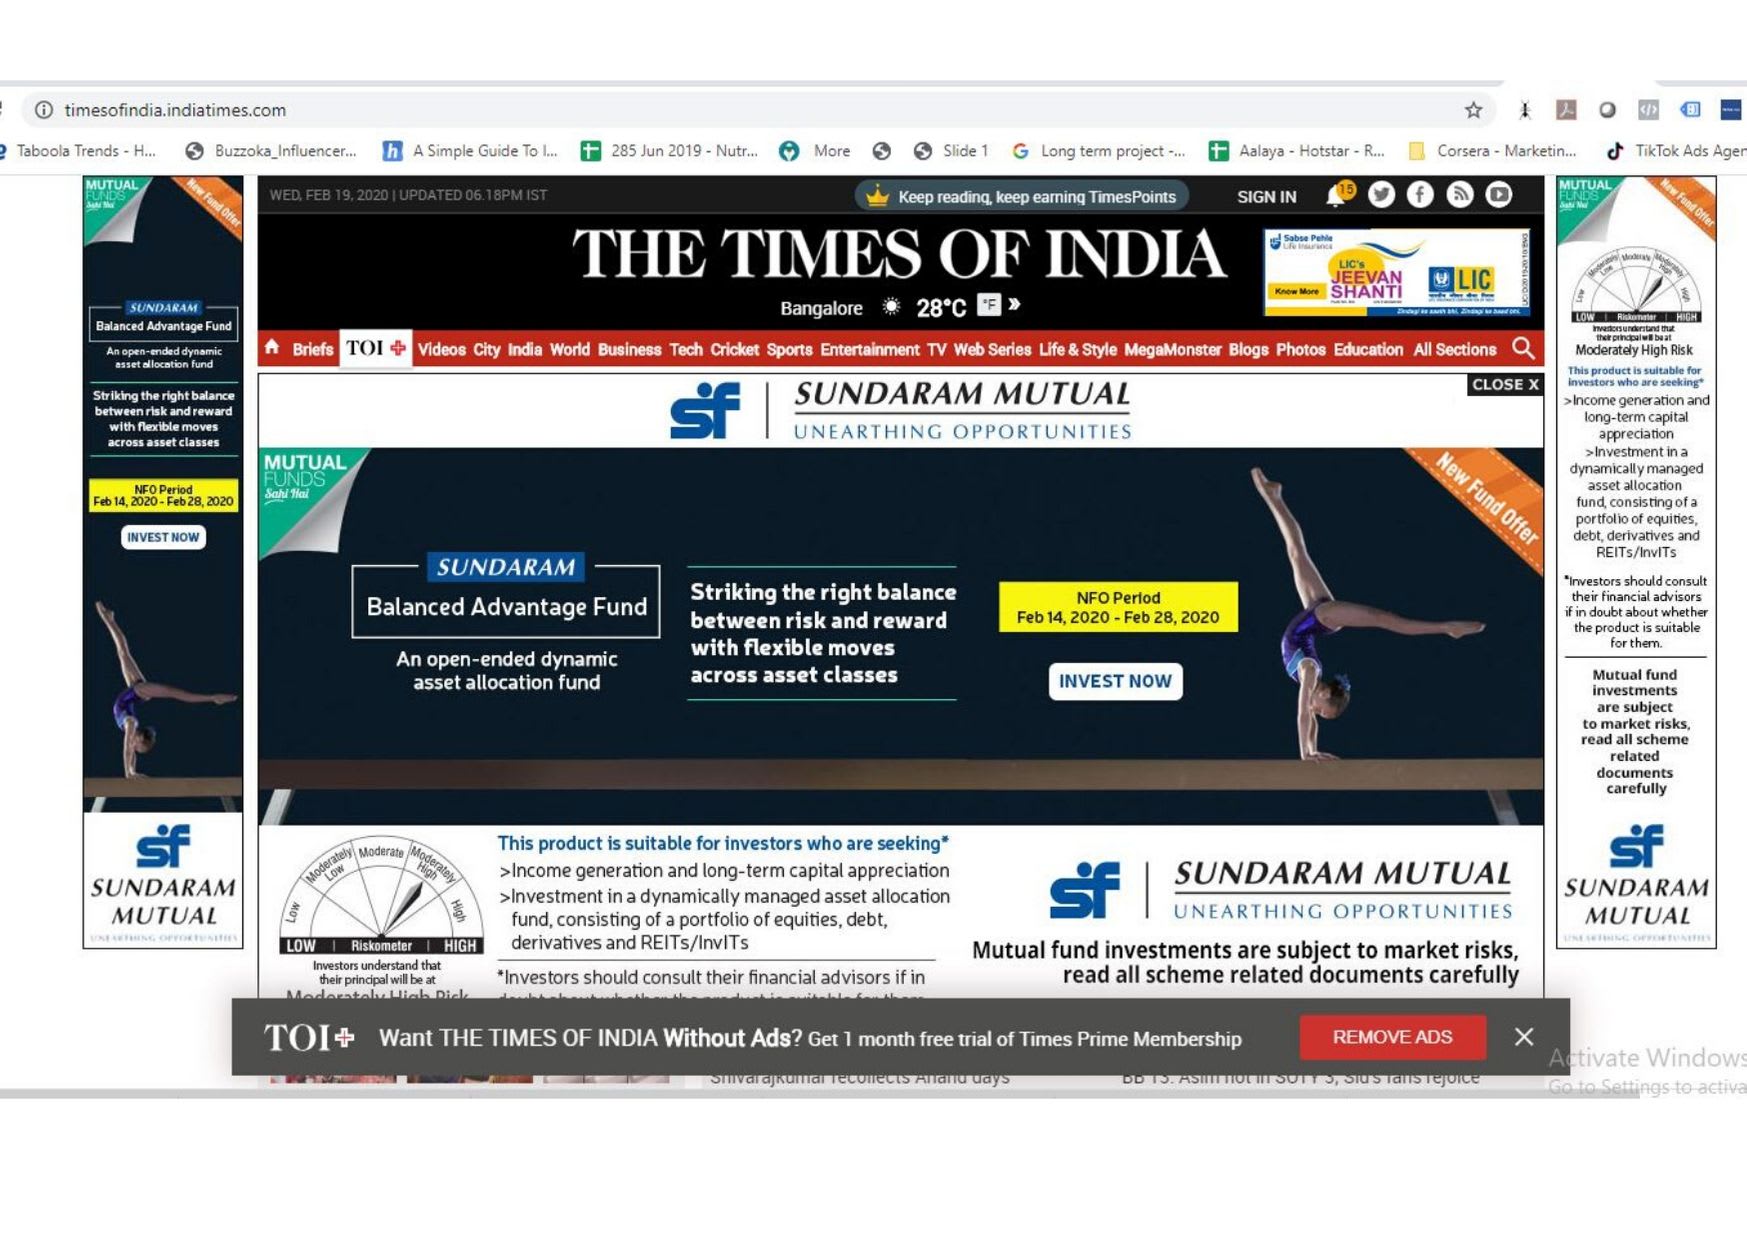 Times of India - Roadblock Advertising - Option 2